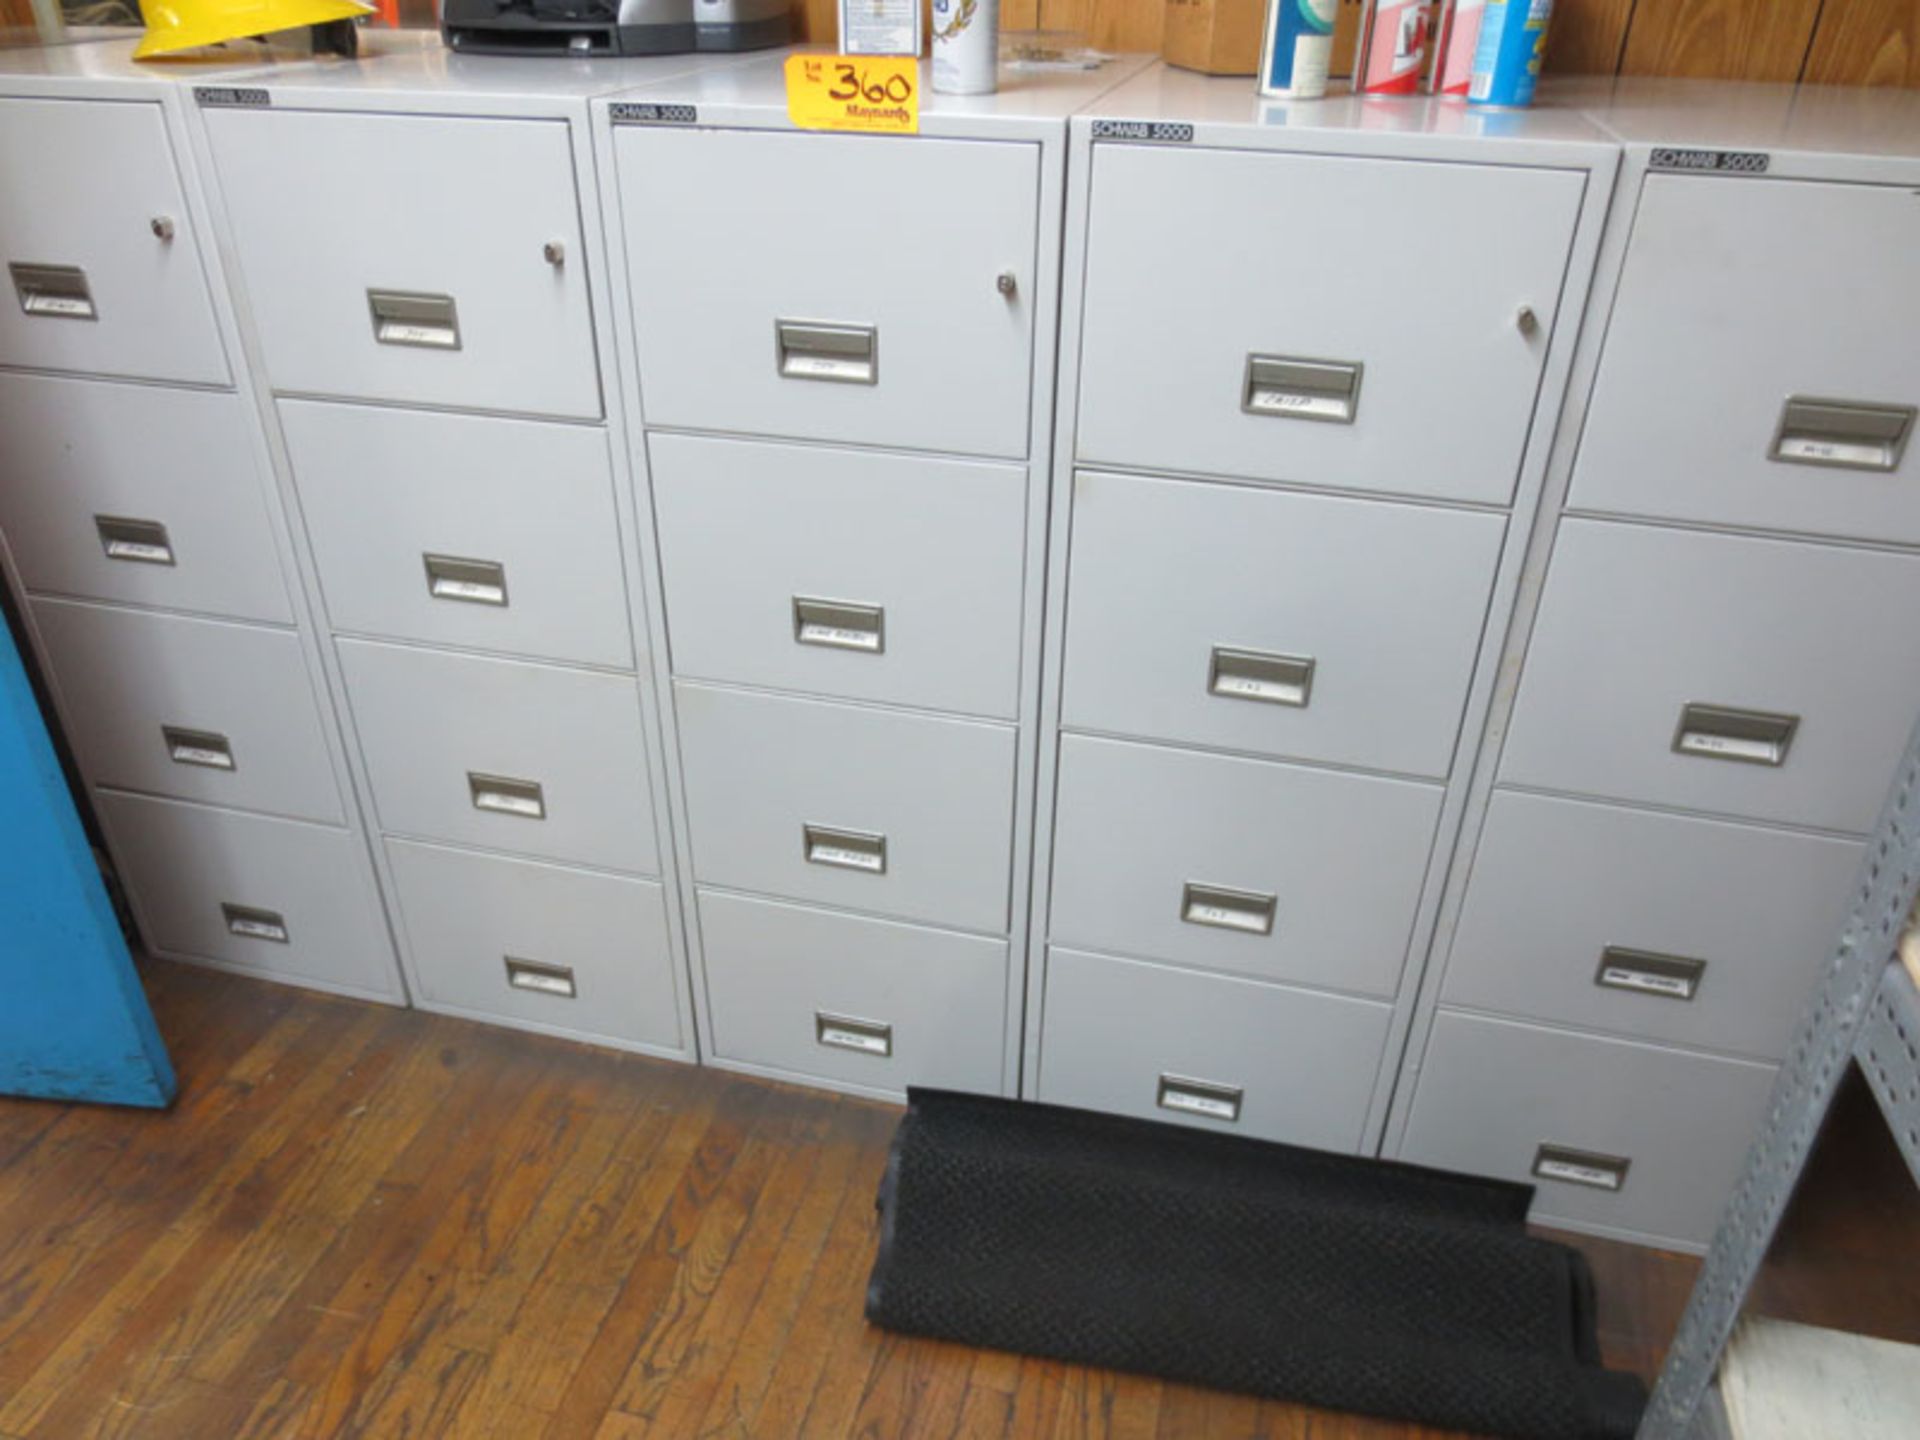 (5) Schwab 5000 Fireproof File Cabinets, 4 Drawer